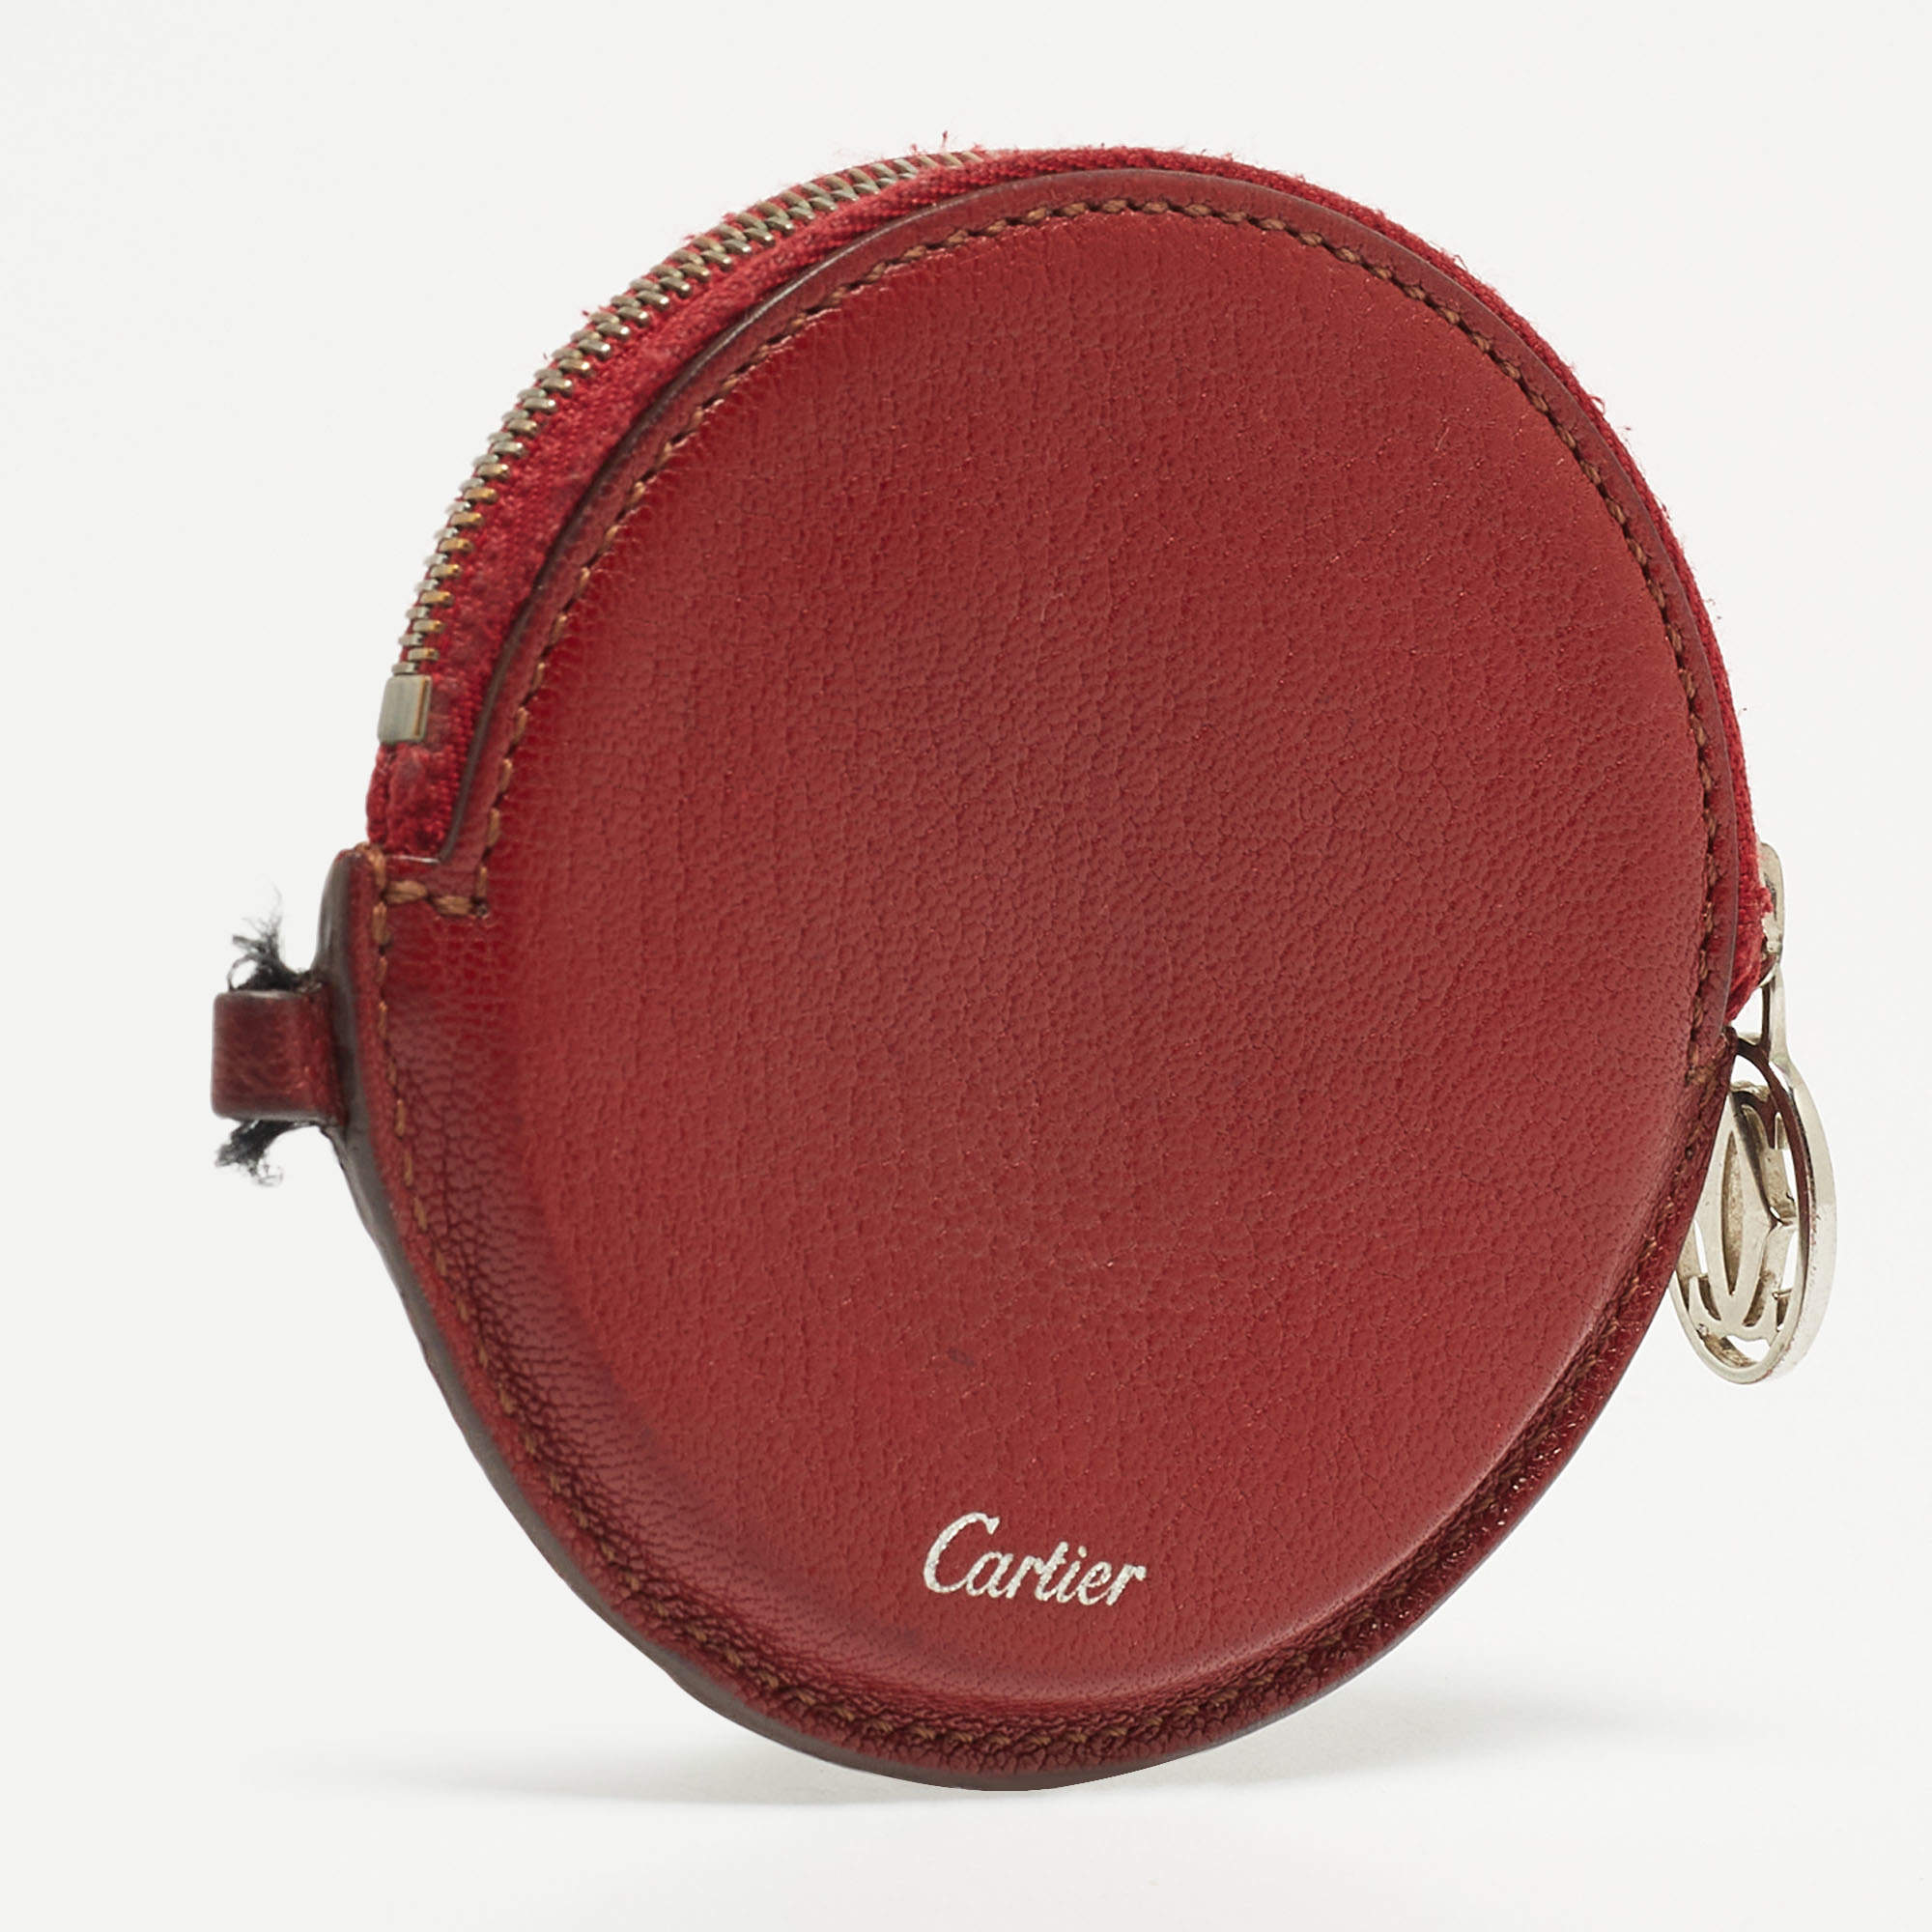 Lot - Cartier Coin Purse; Deep red leather Cartier coin purse with original  Cartier box.